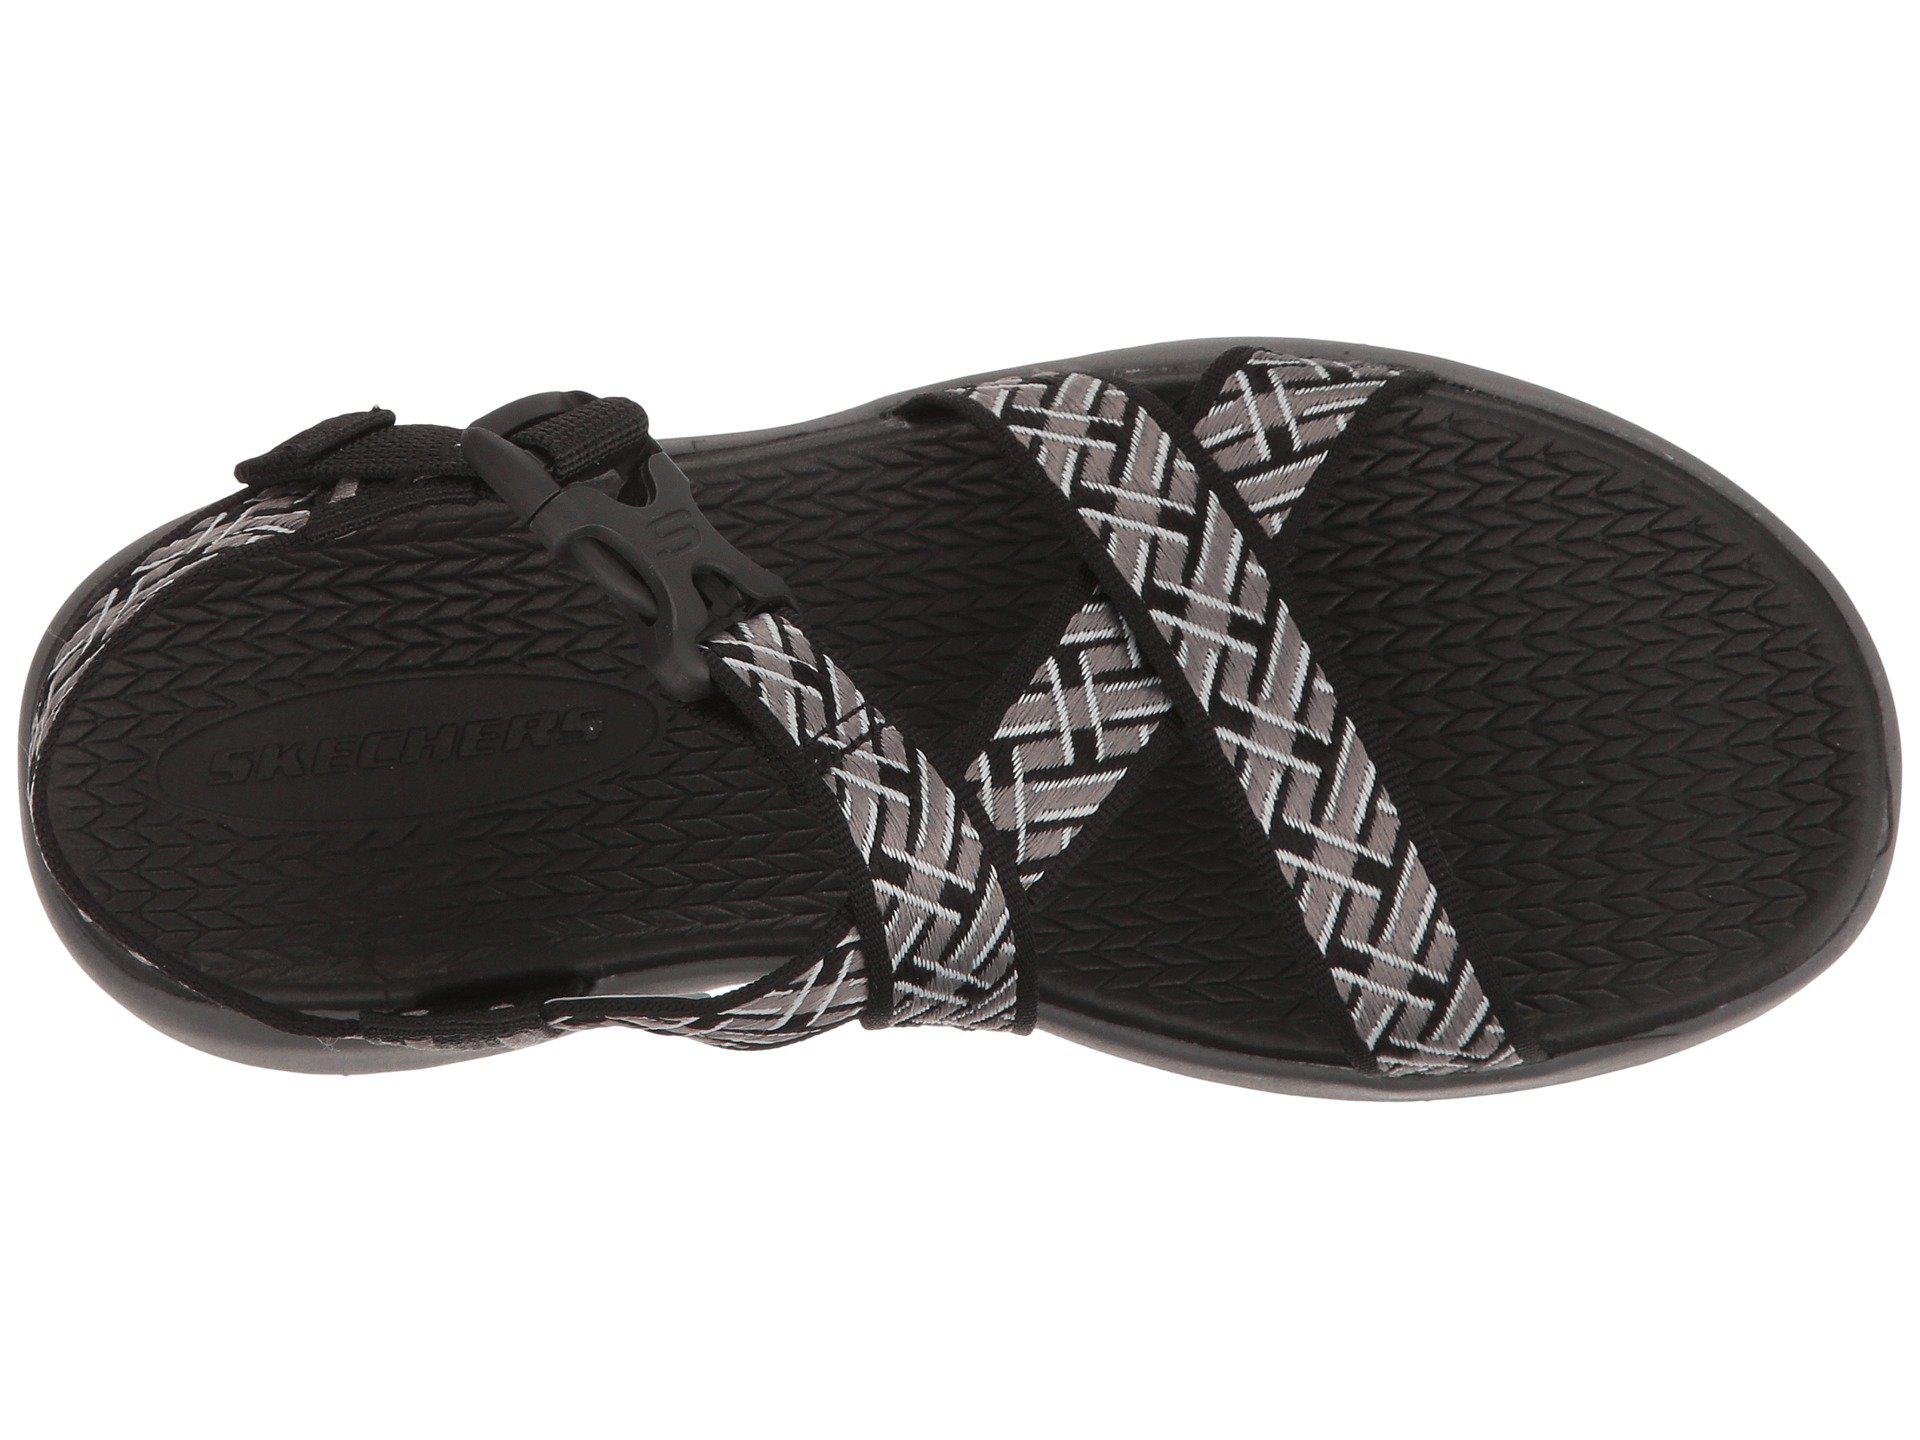 Skechers Synthetic Outdoor Adjustable Sandal in Black/Gray ...